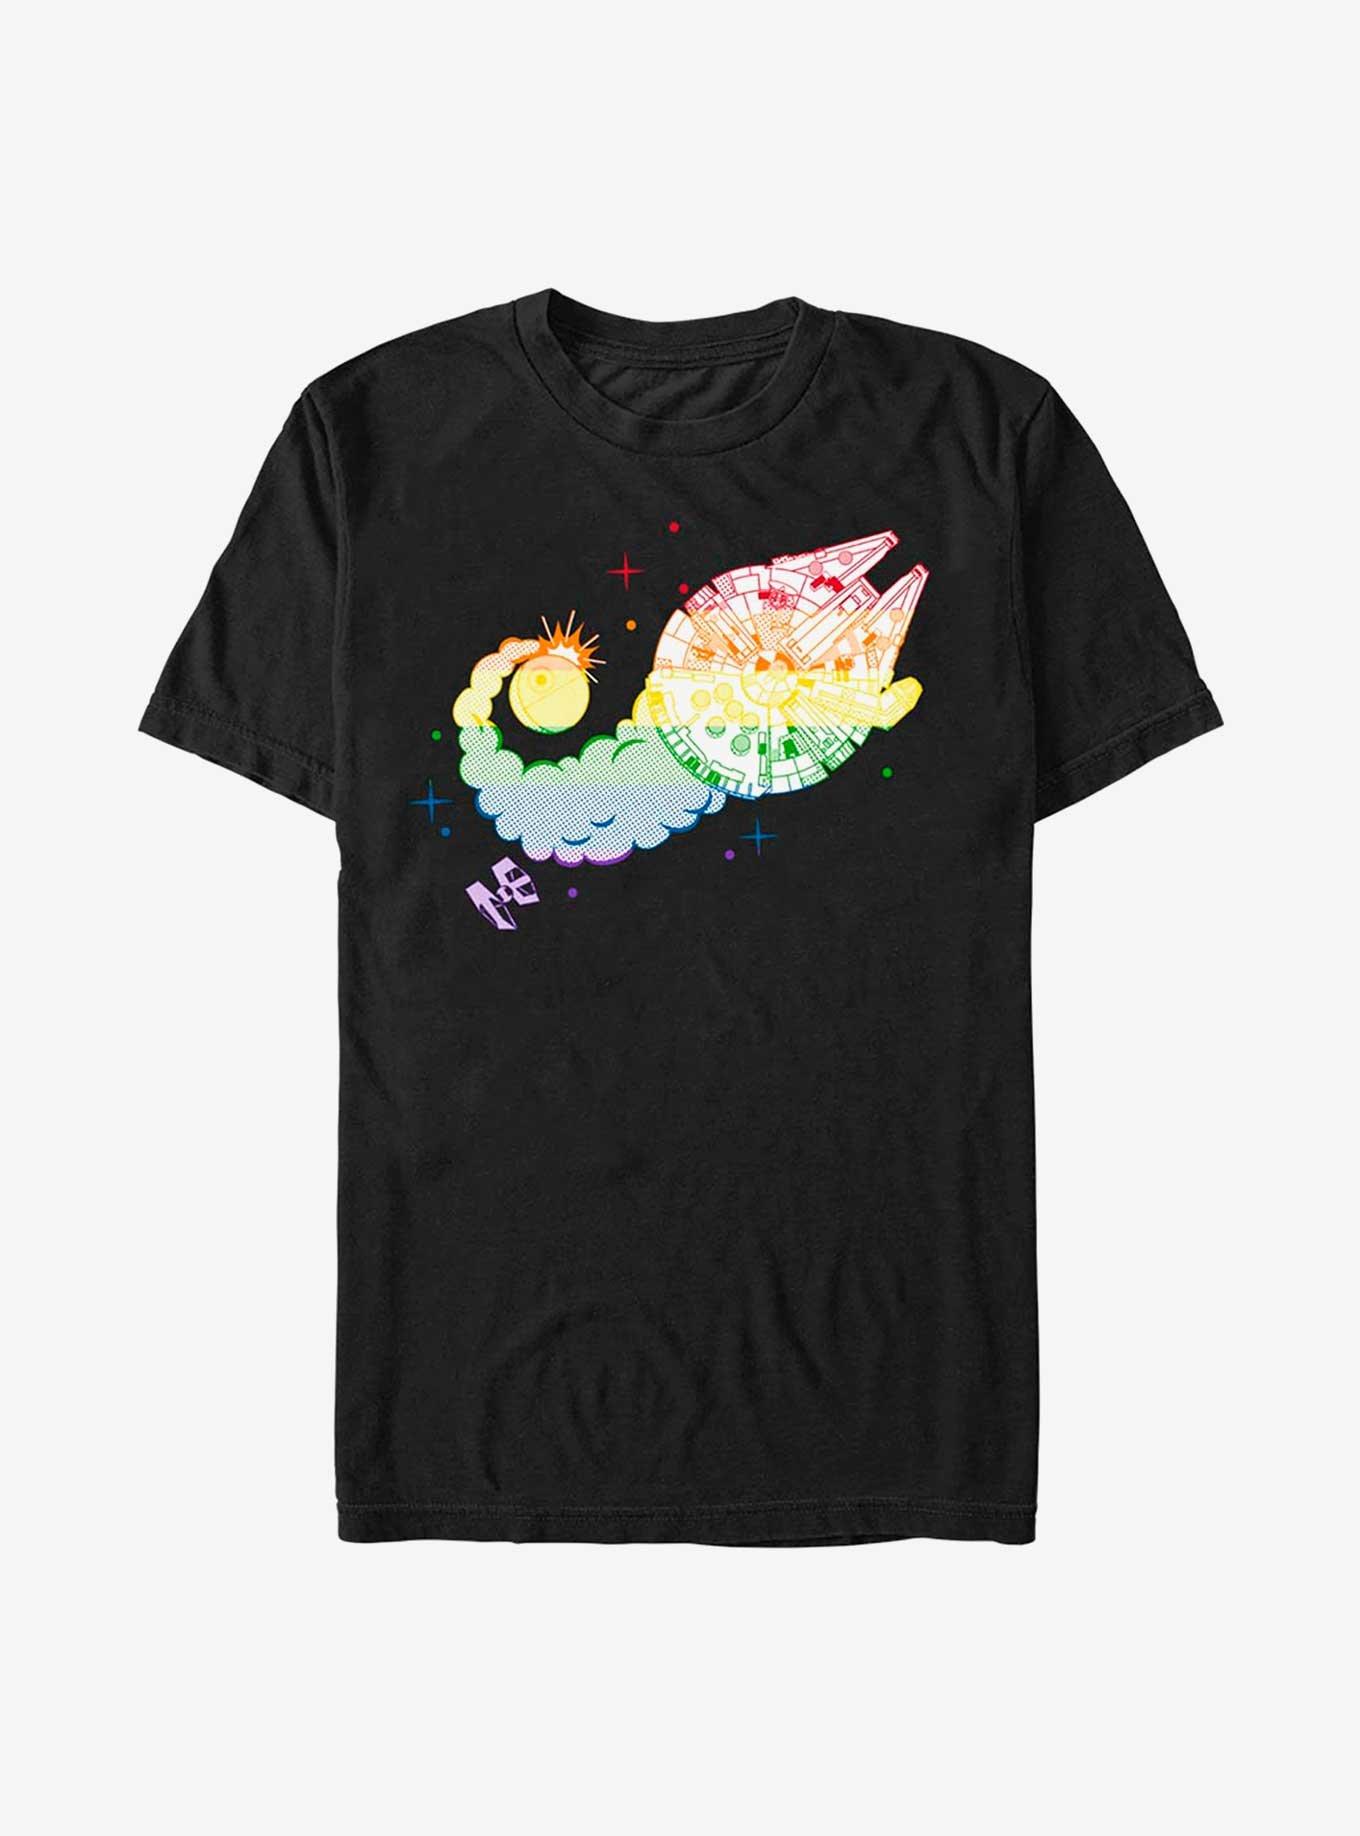 Star Wars Falcon Adventure Pride T-Shirt